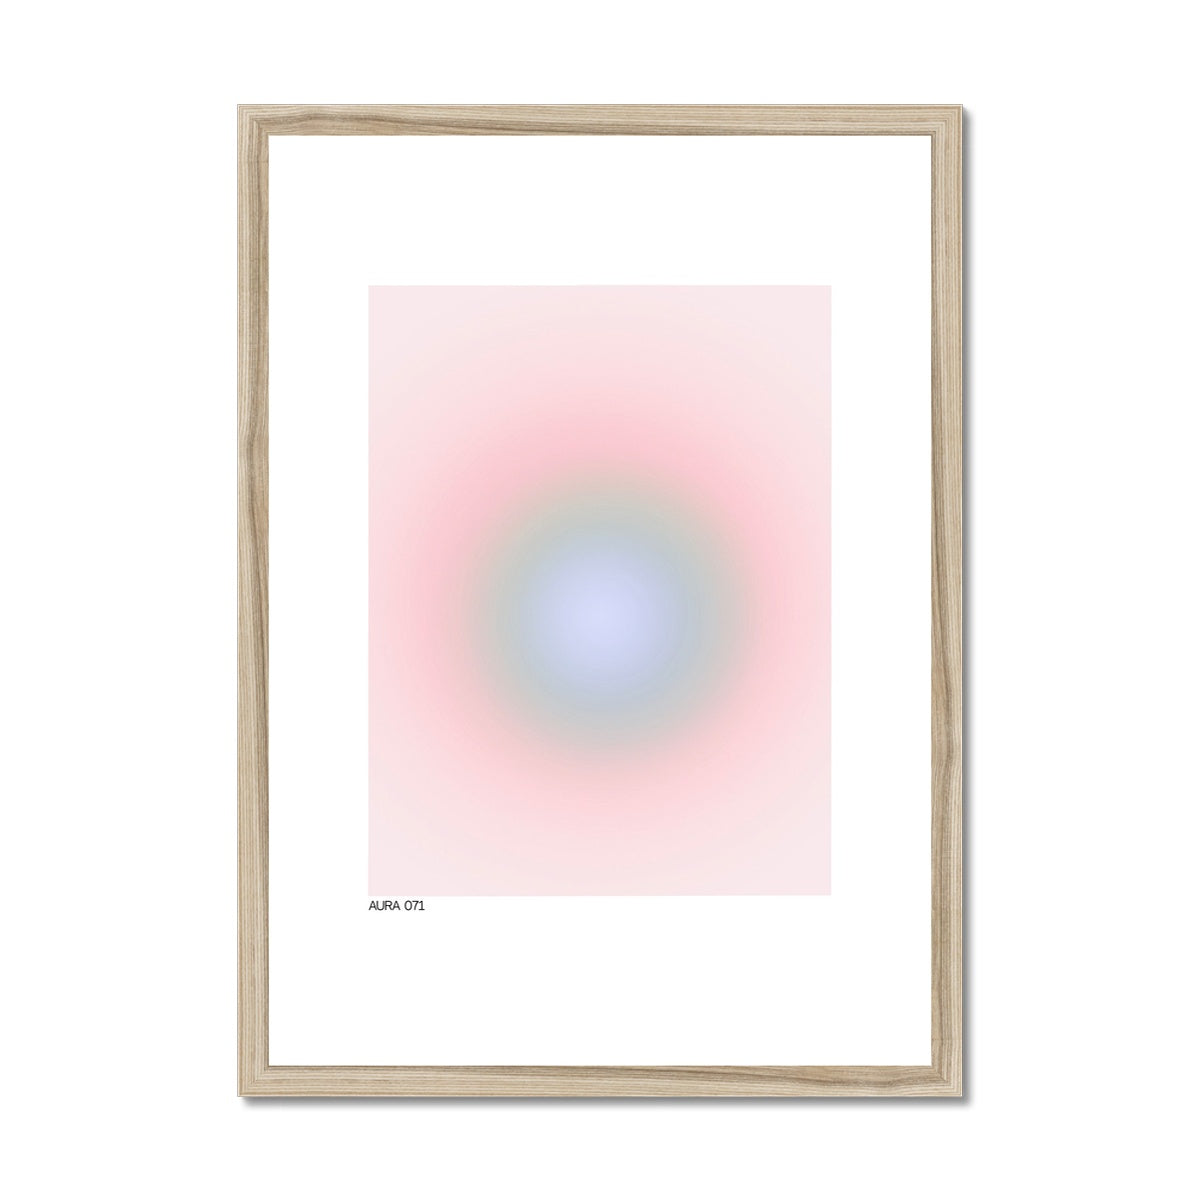 aura 071 Framed & Mounted Print